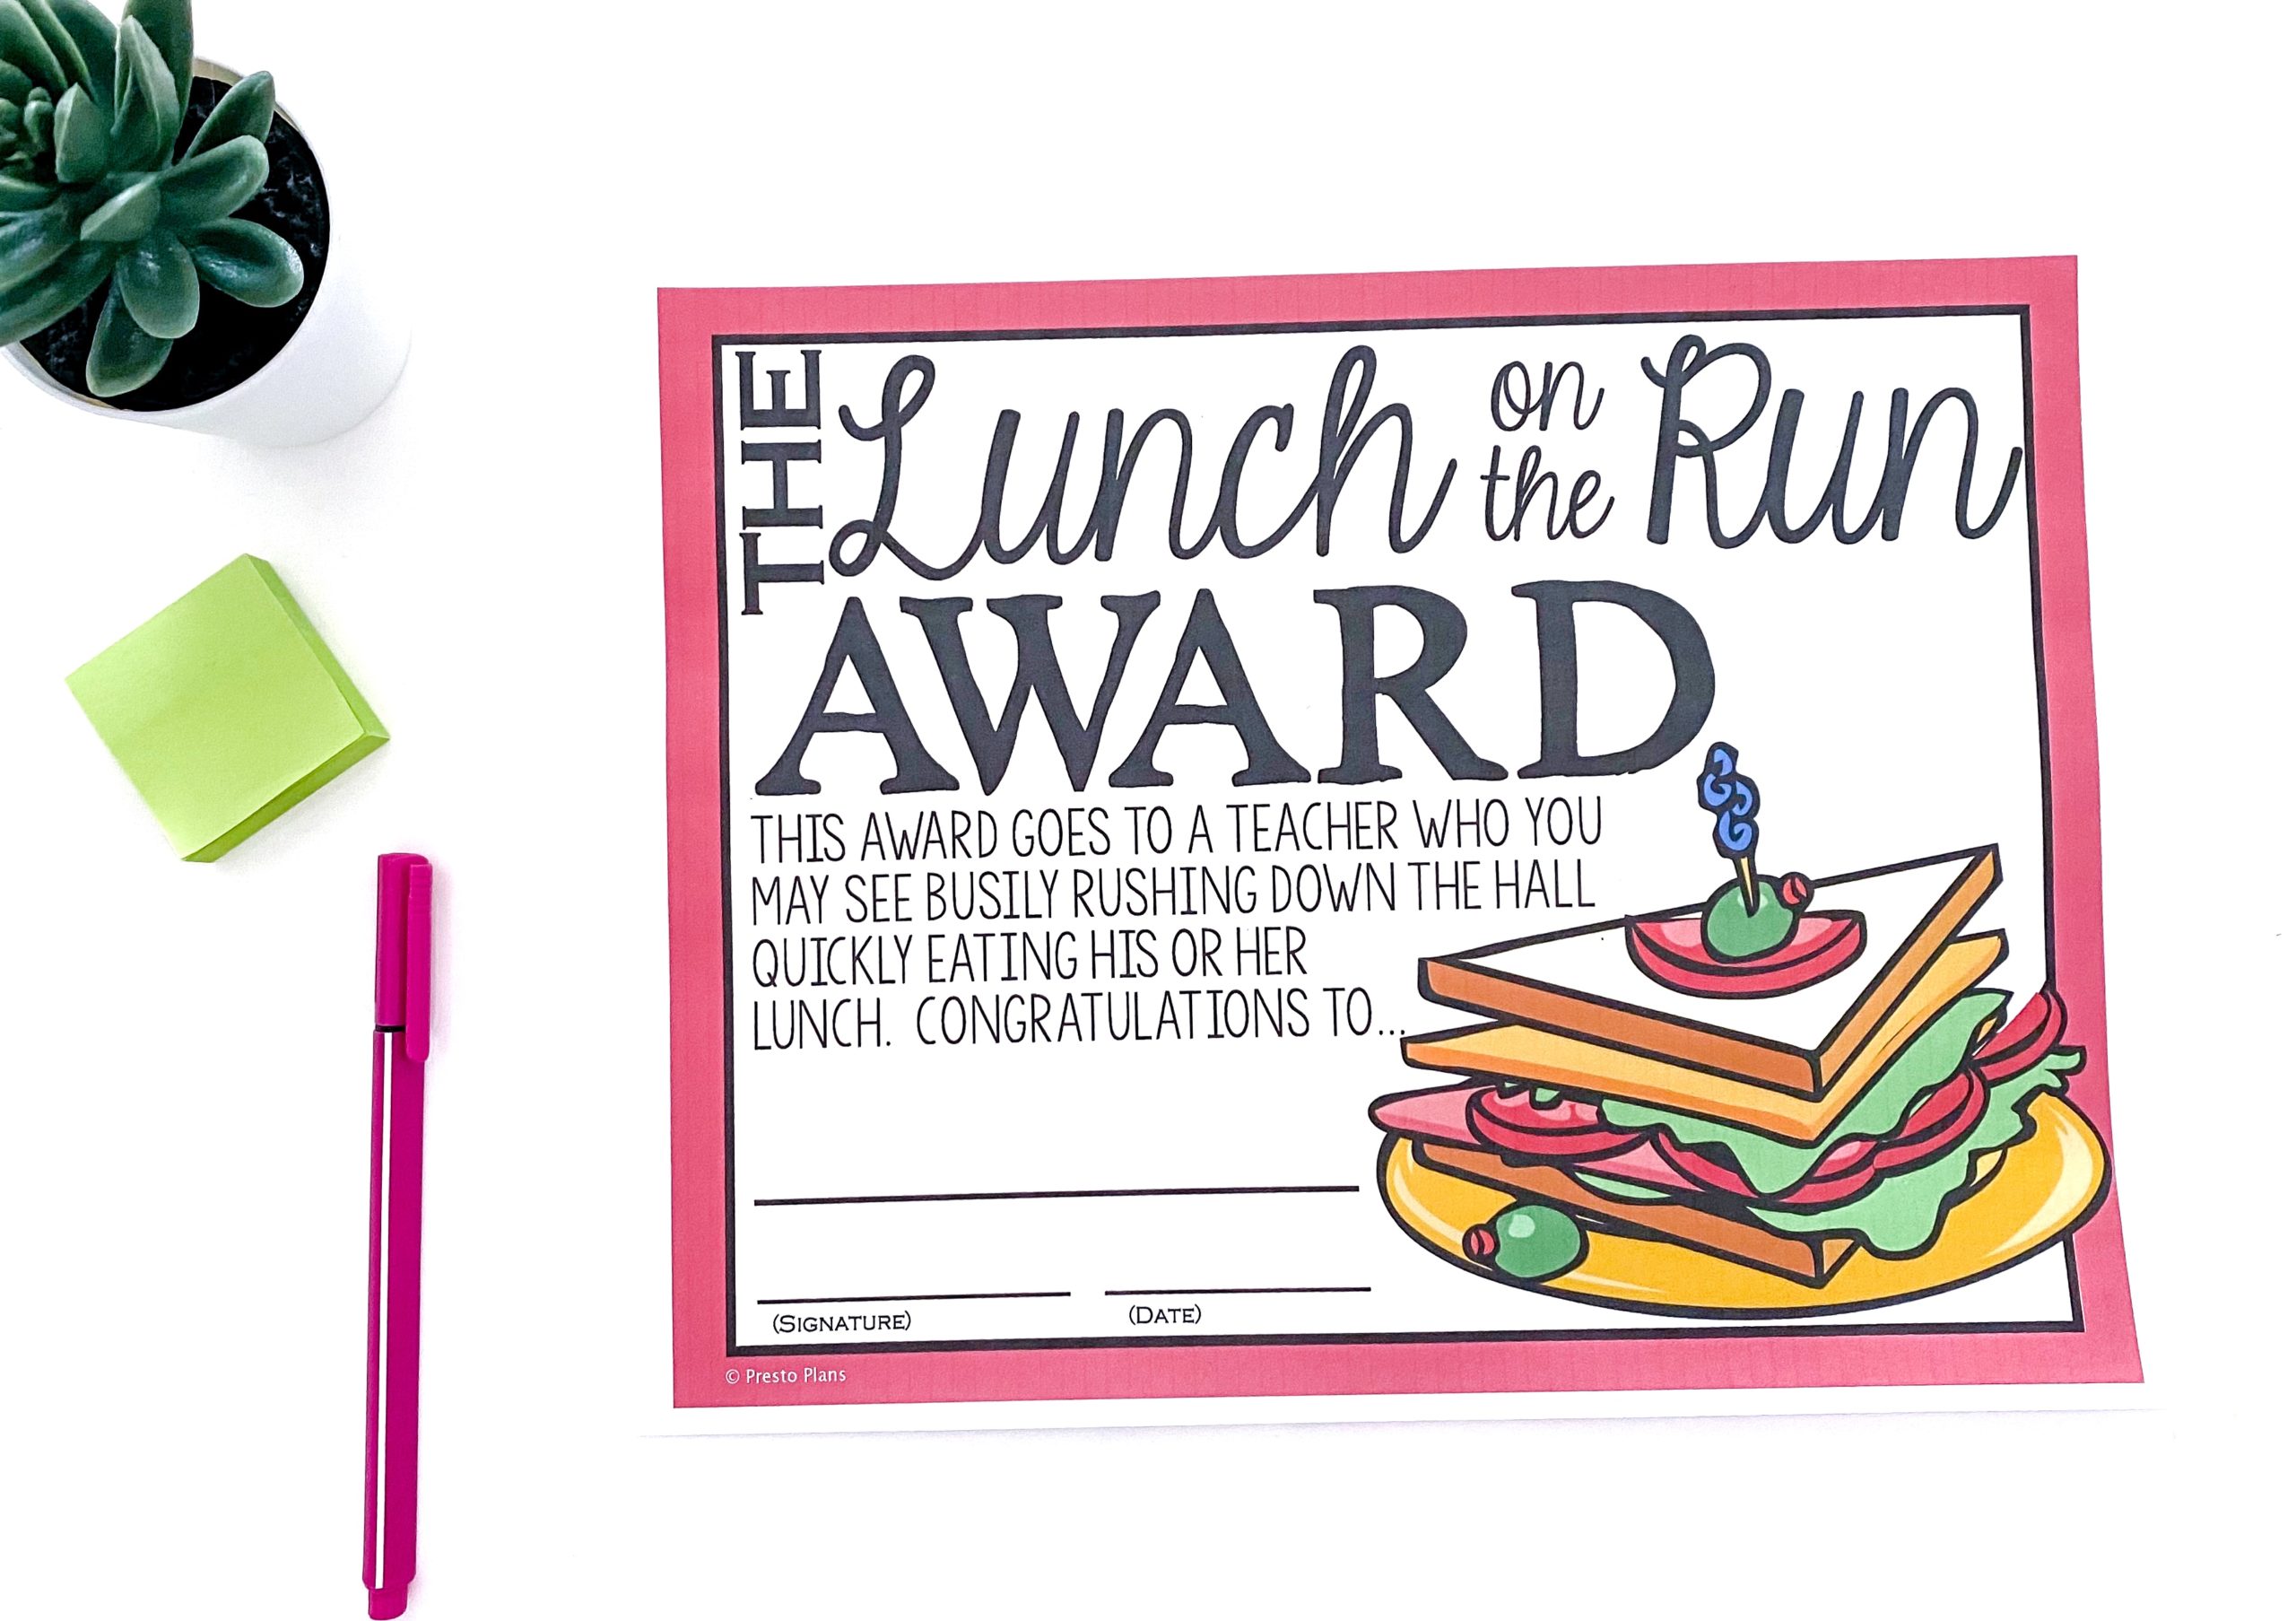 The Lunch on the Run Teaching Award